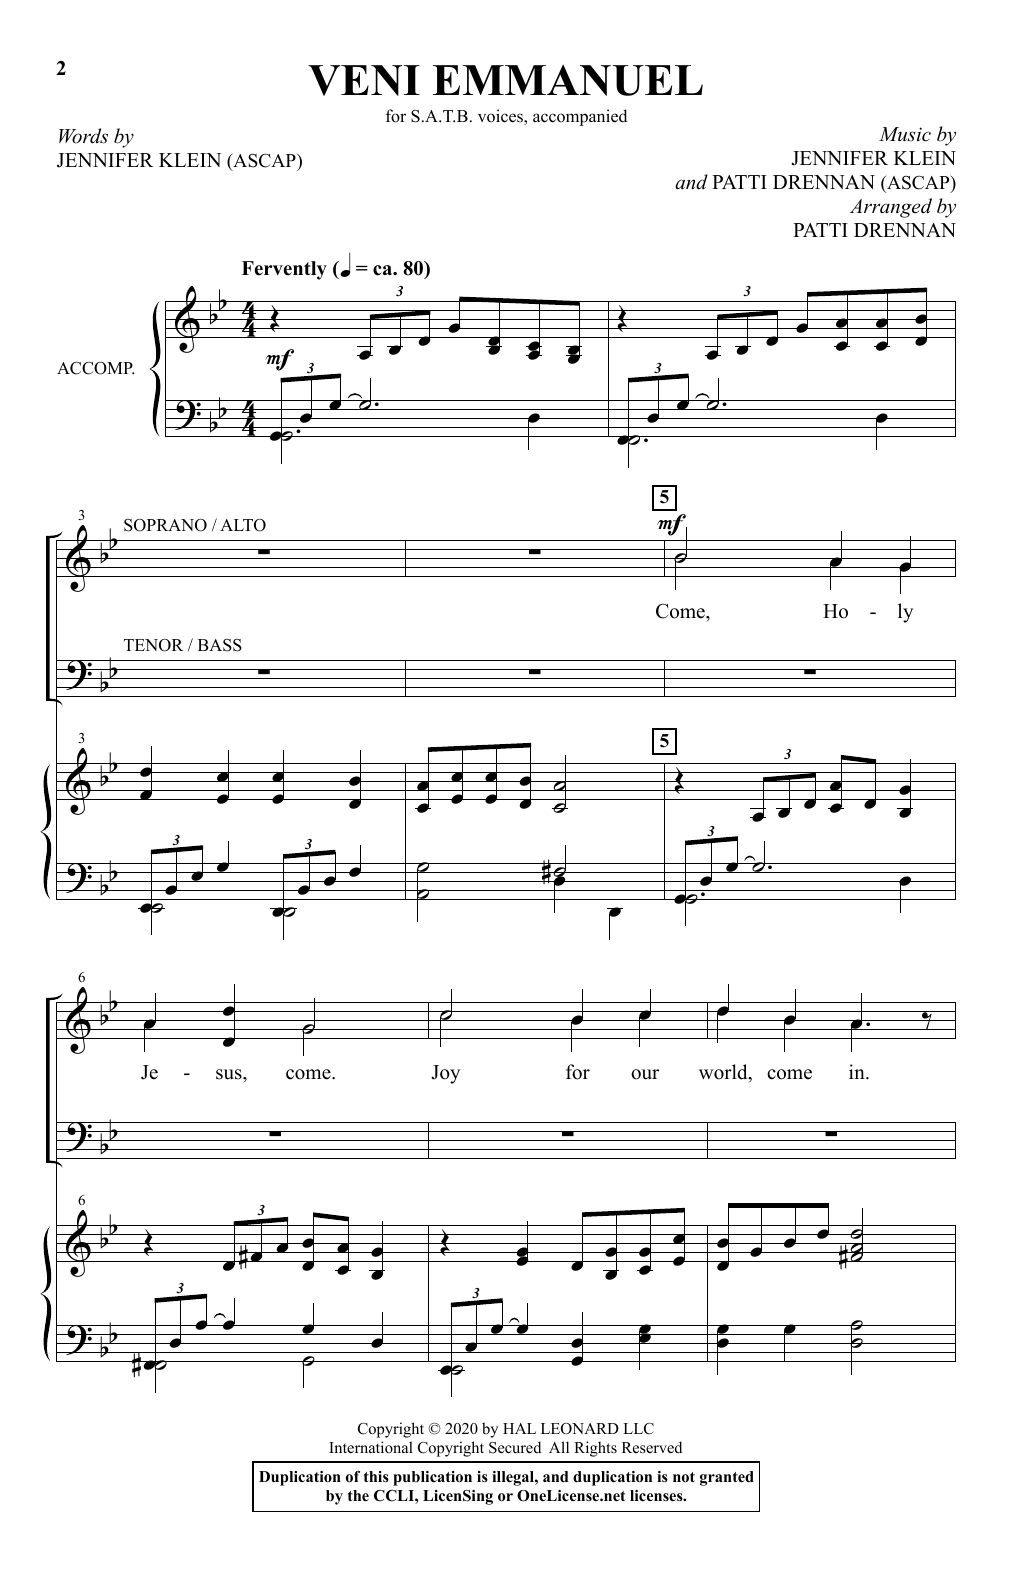 Download Jennifer Klein Veni Emmanuel (arr. Patti Drennan) Sheet Music and learn how to play SATB Choir PDF digital score in minutes